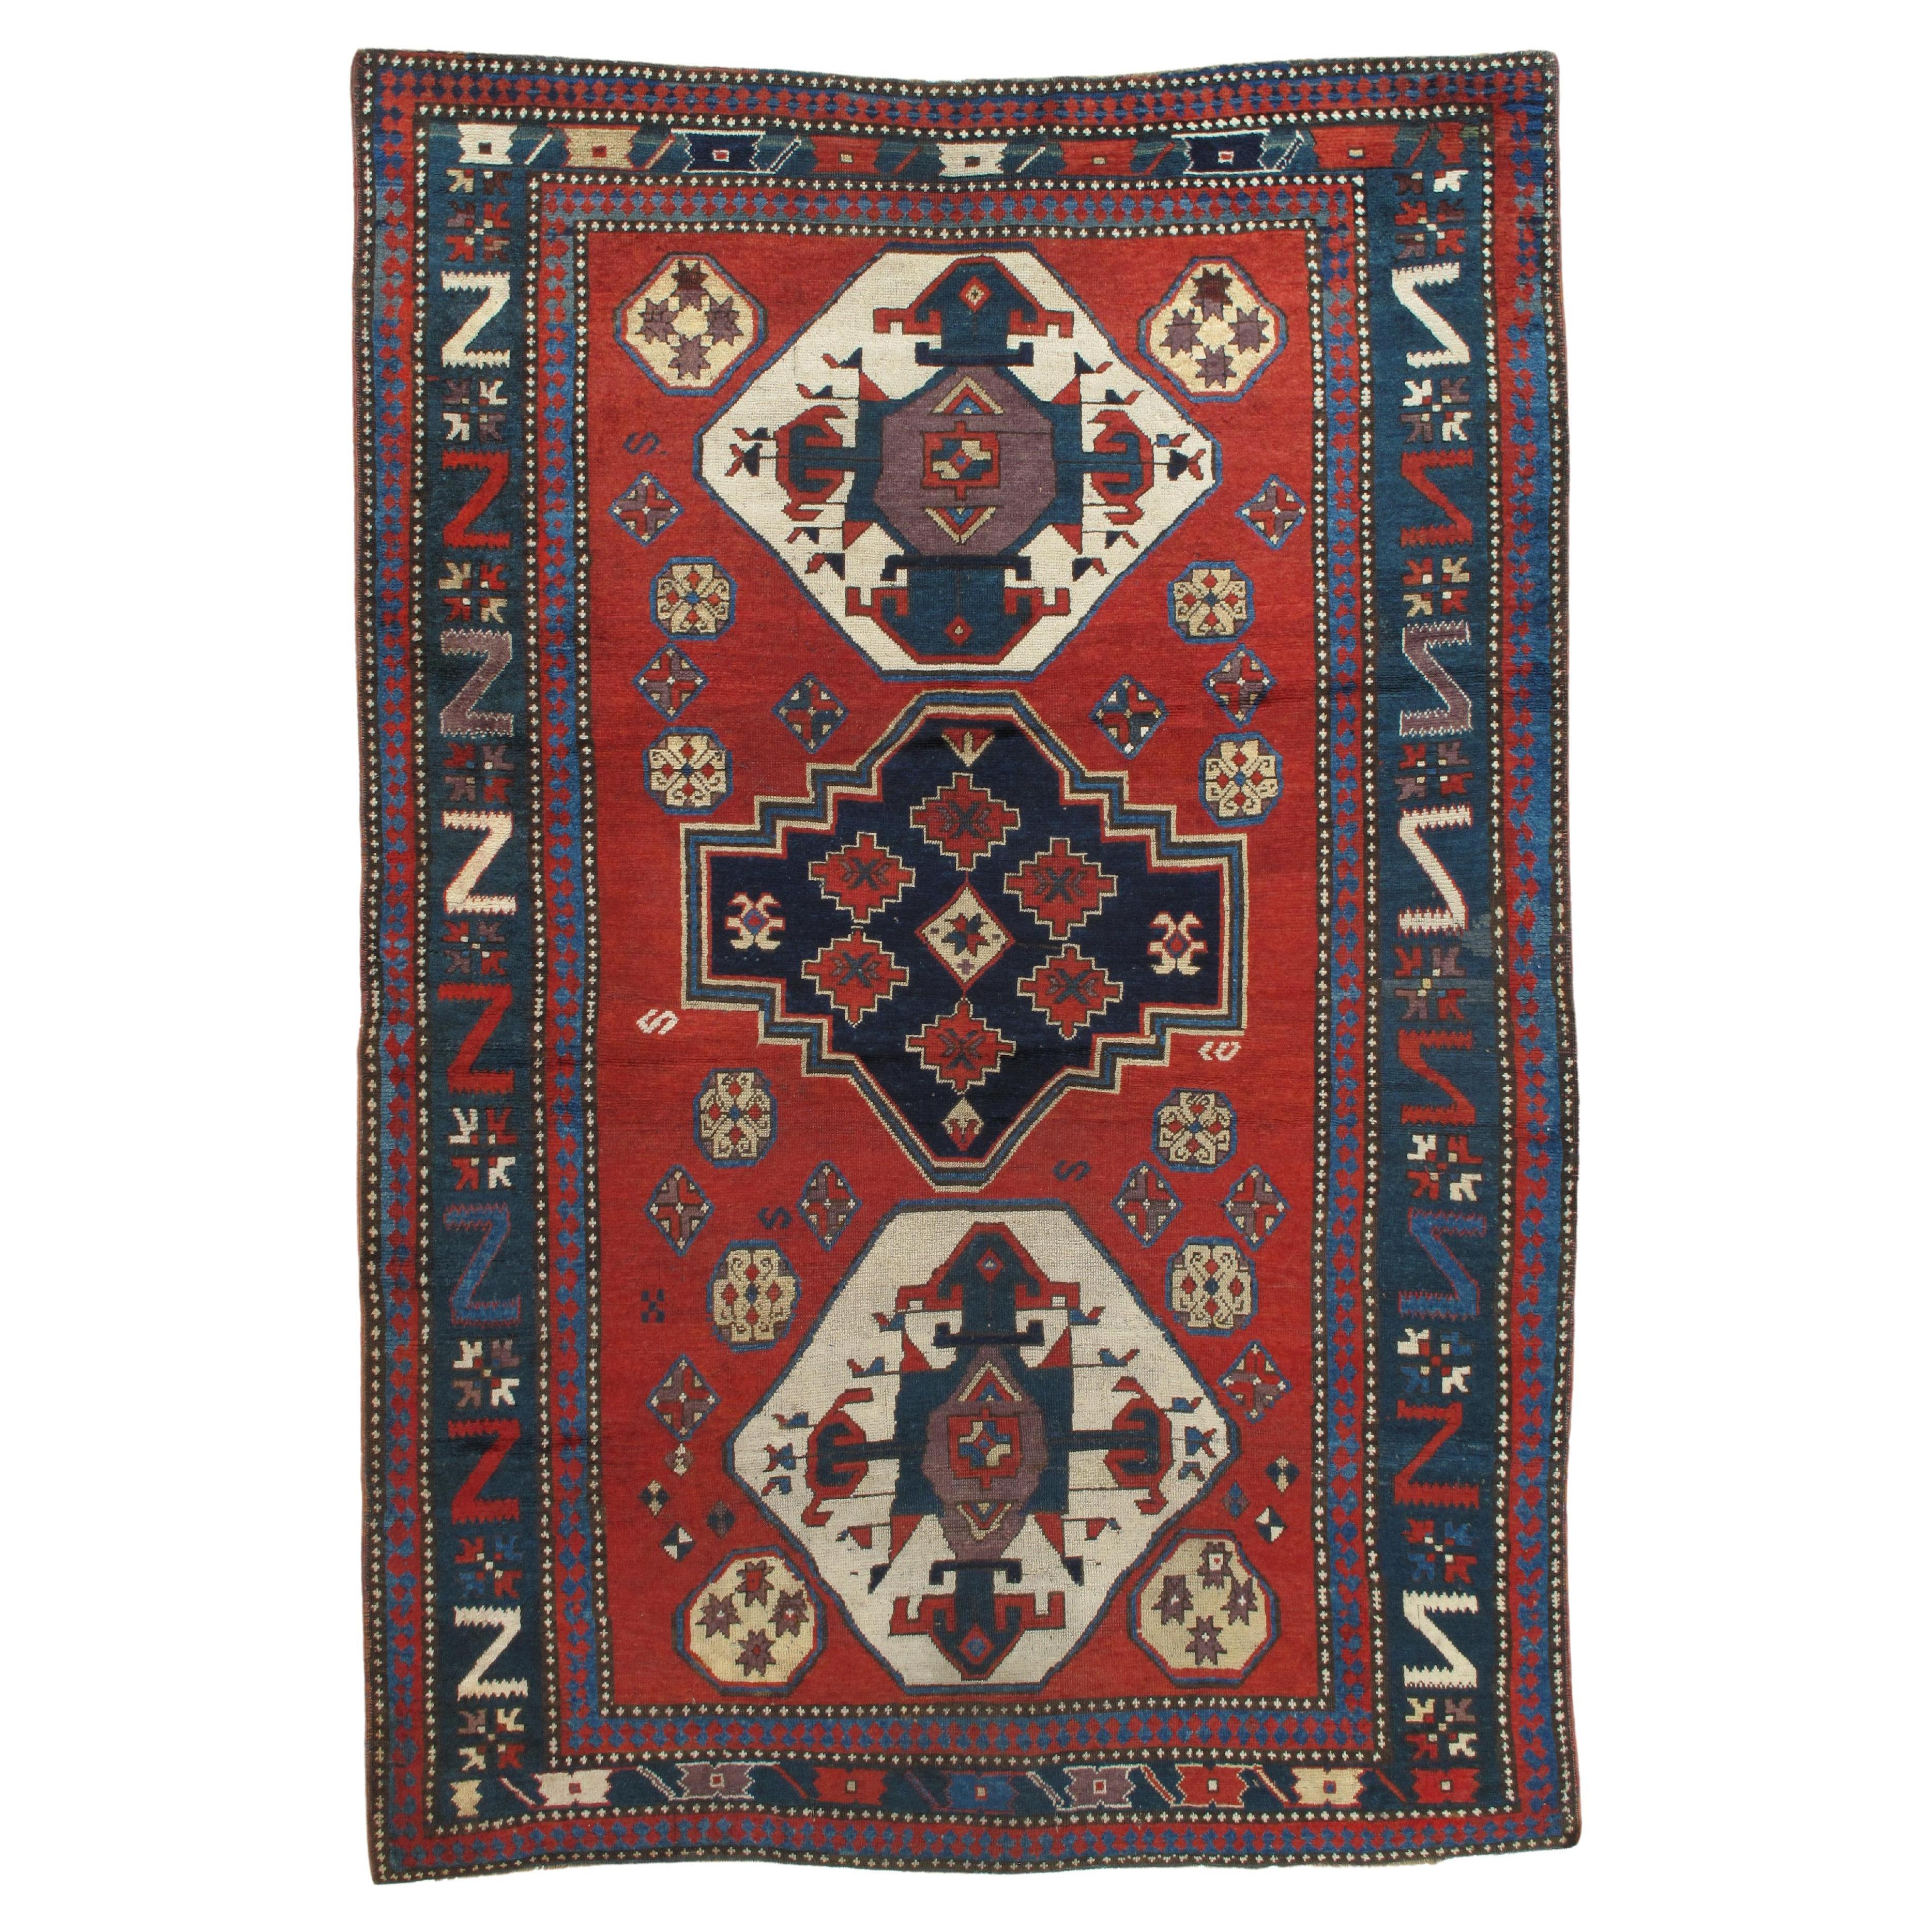 Antique Kazak Carpet, Handmade Wool, Rust, Ivory, Navy, Light Blue and Geometric For Sale